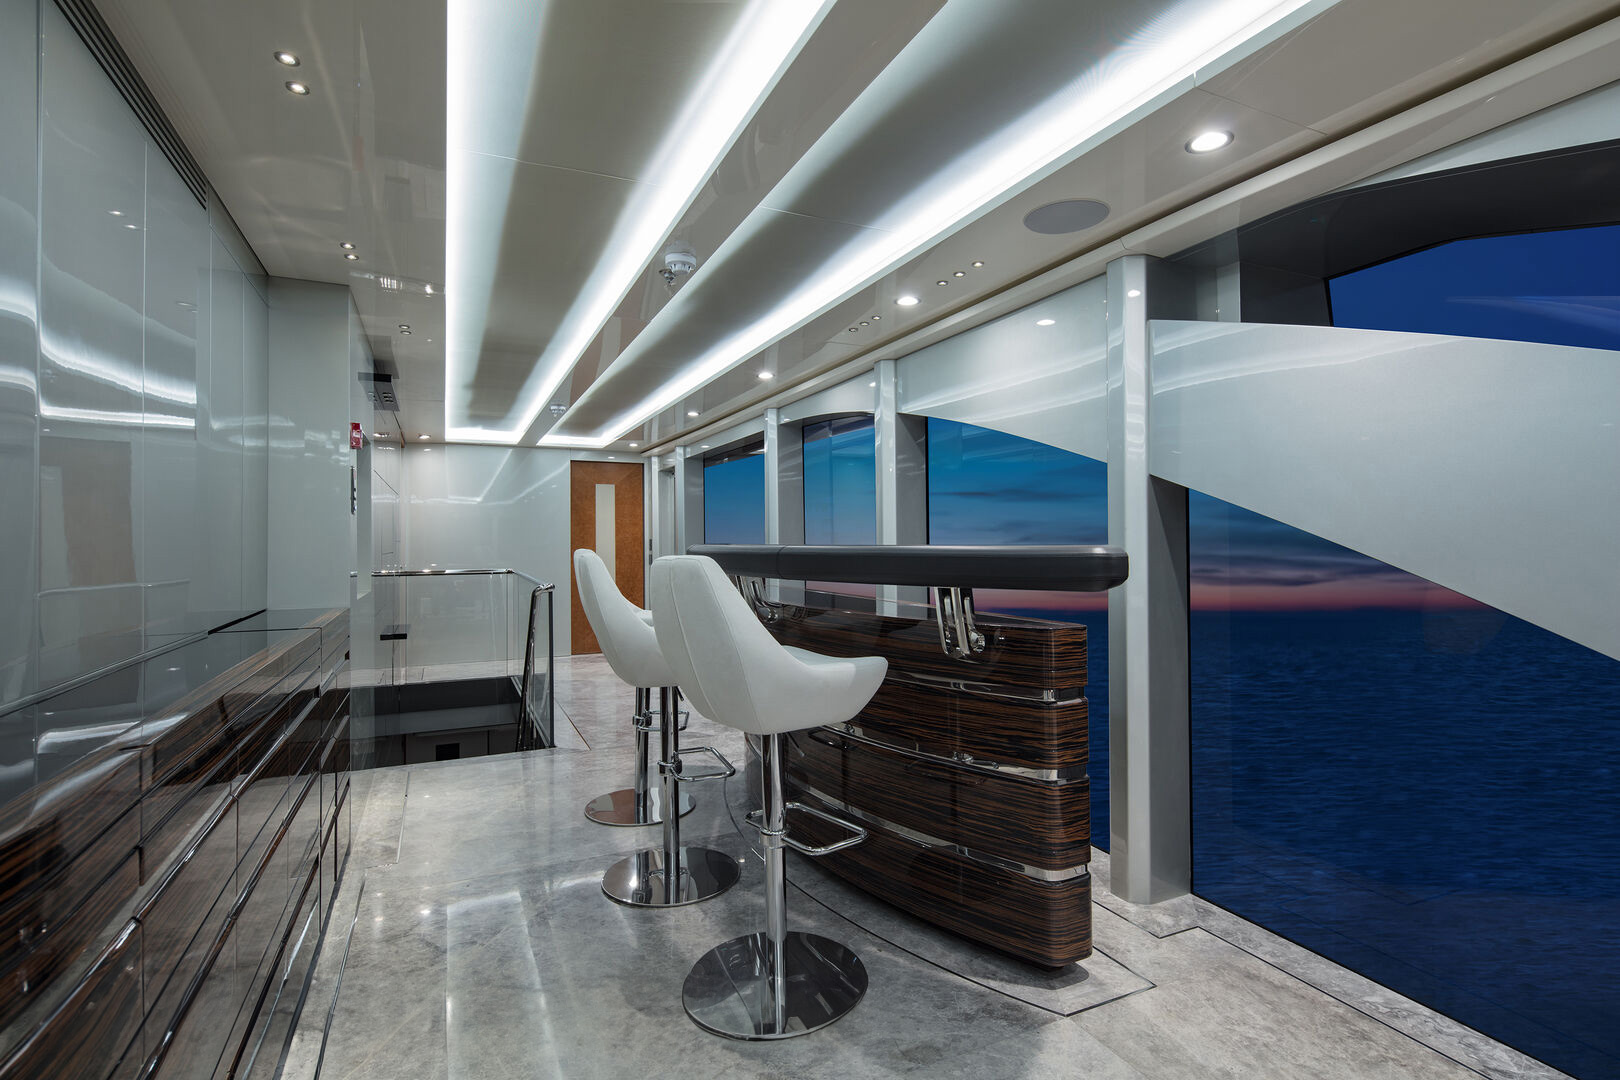 Ameublement haut de gamme & luxe yacht fournitures